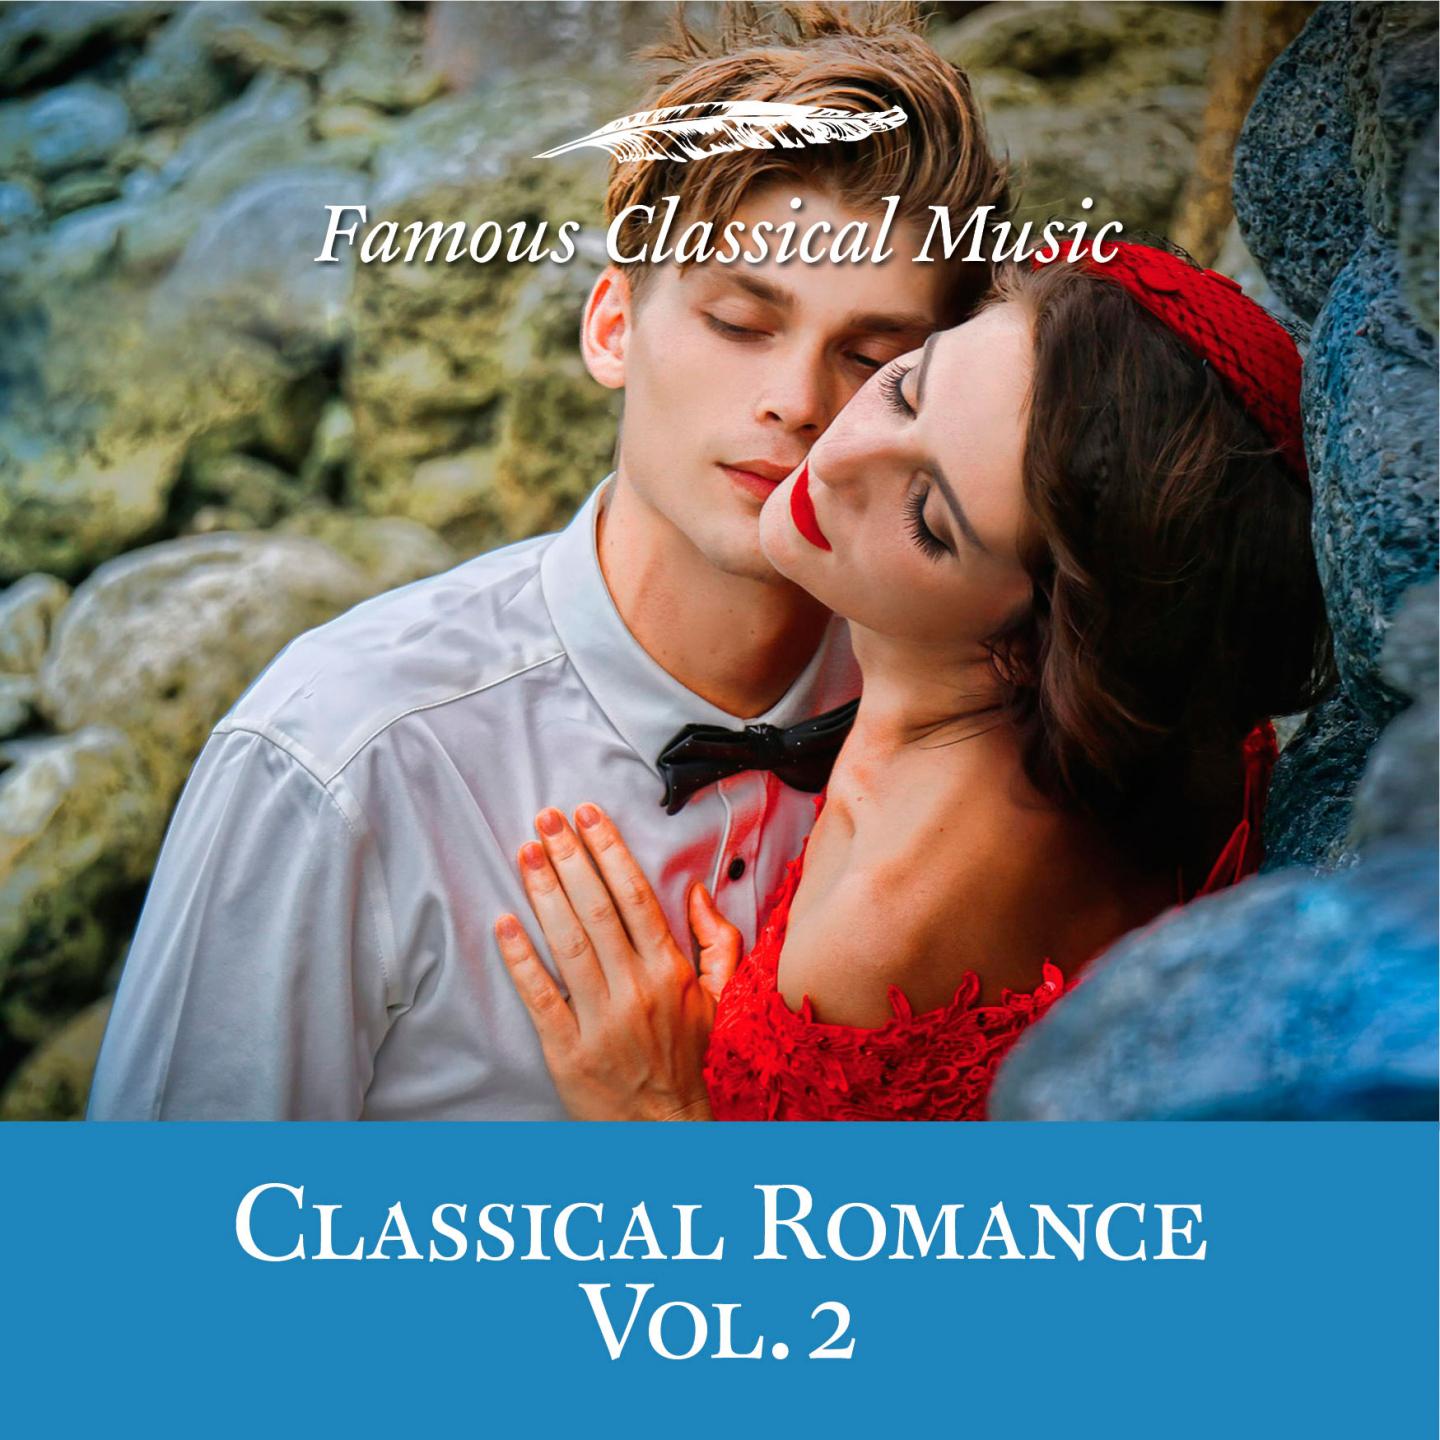 Classical Romance, Vol. 2 (Famous Classical Music)